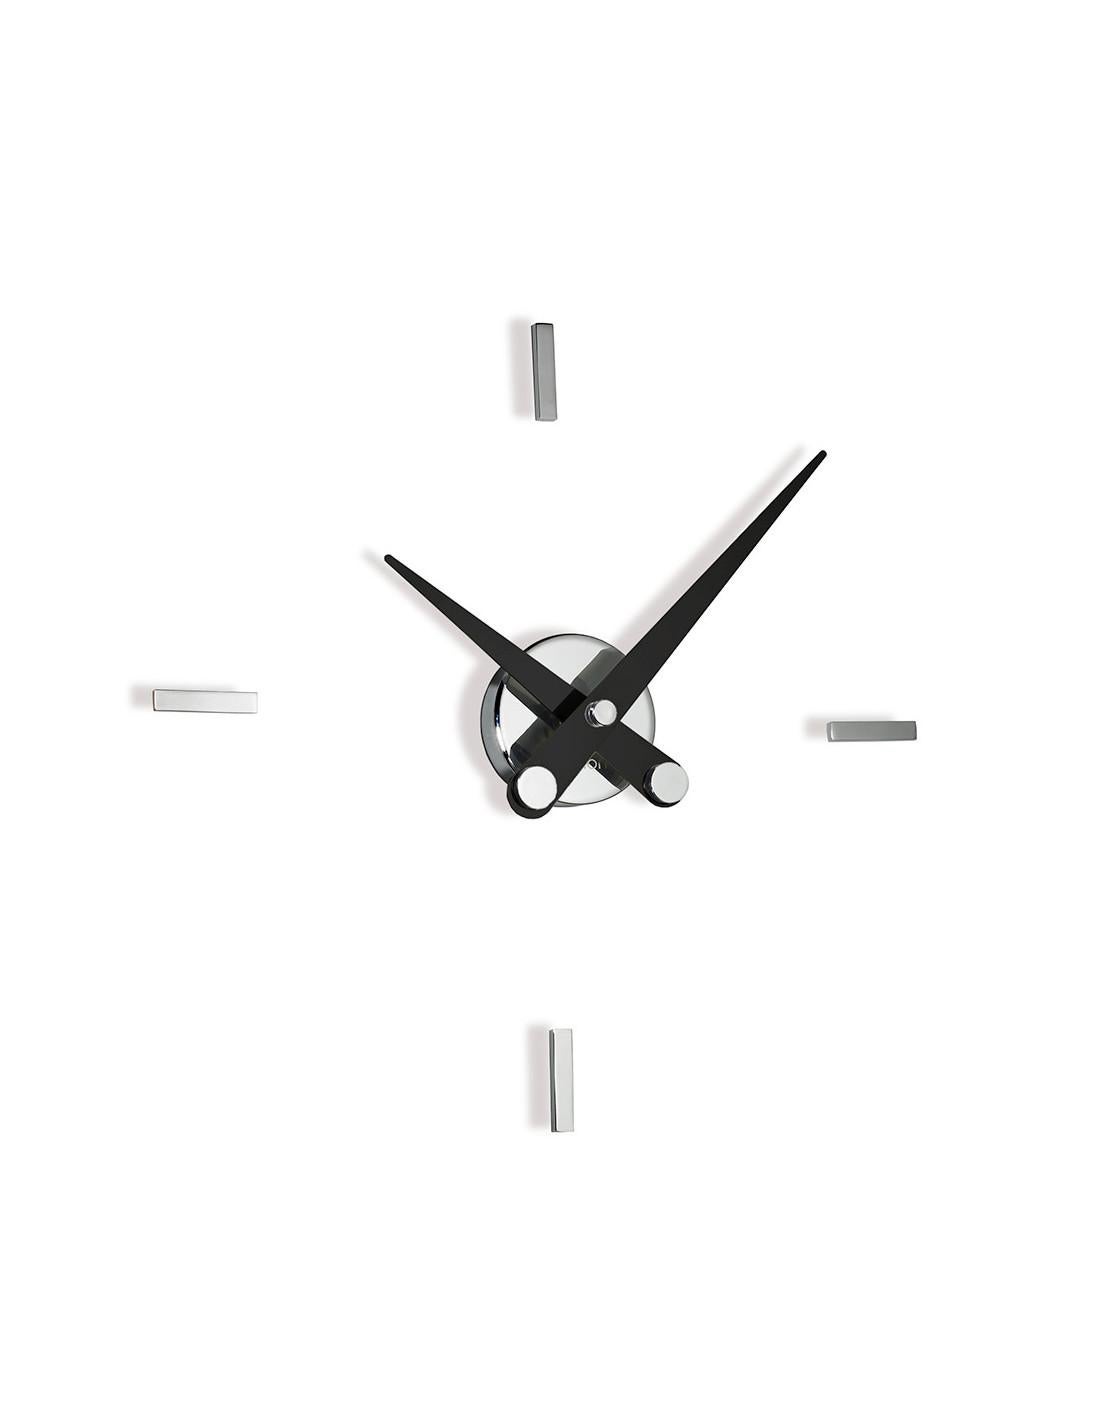 Spanish Puntos Suspensivos 4 i Wall Clock For Sale